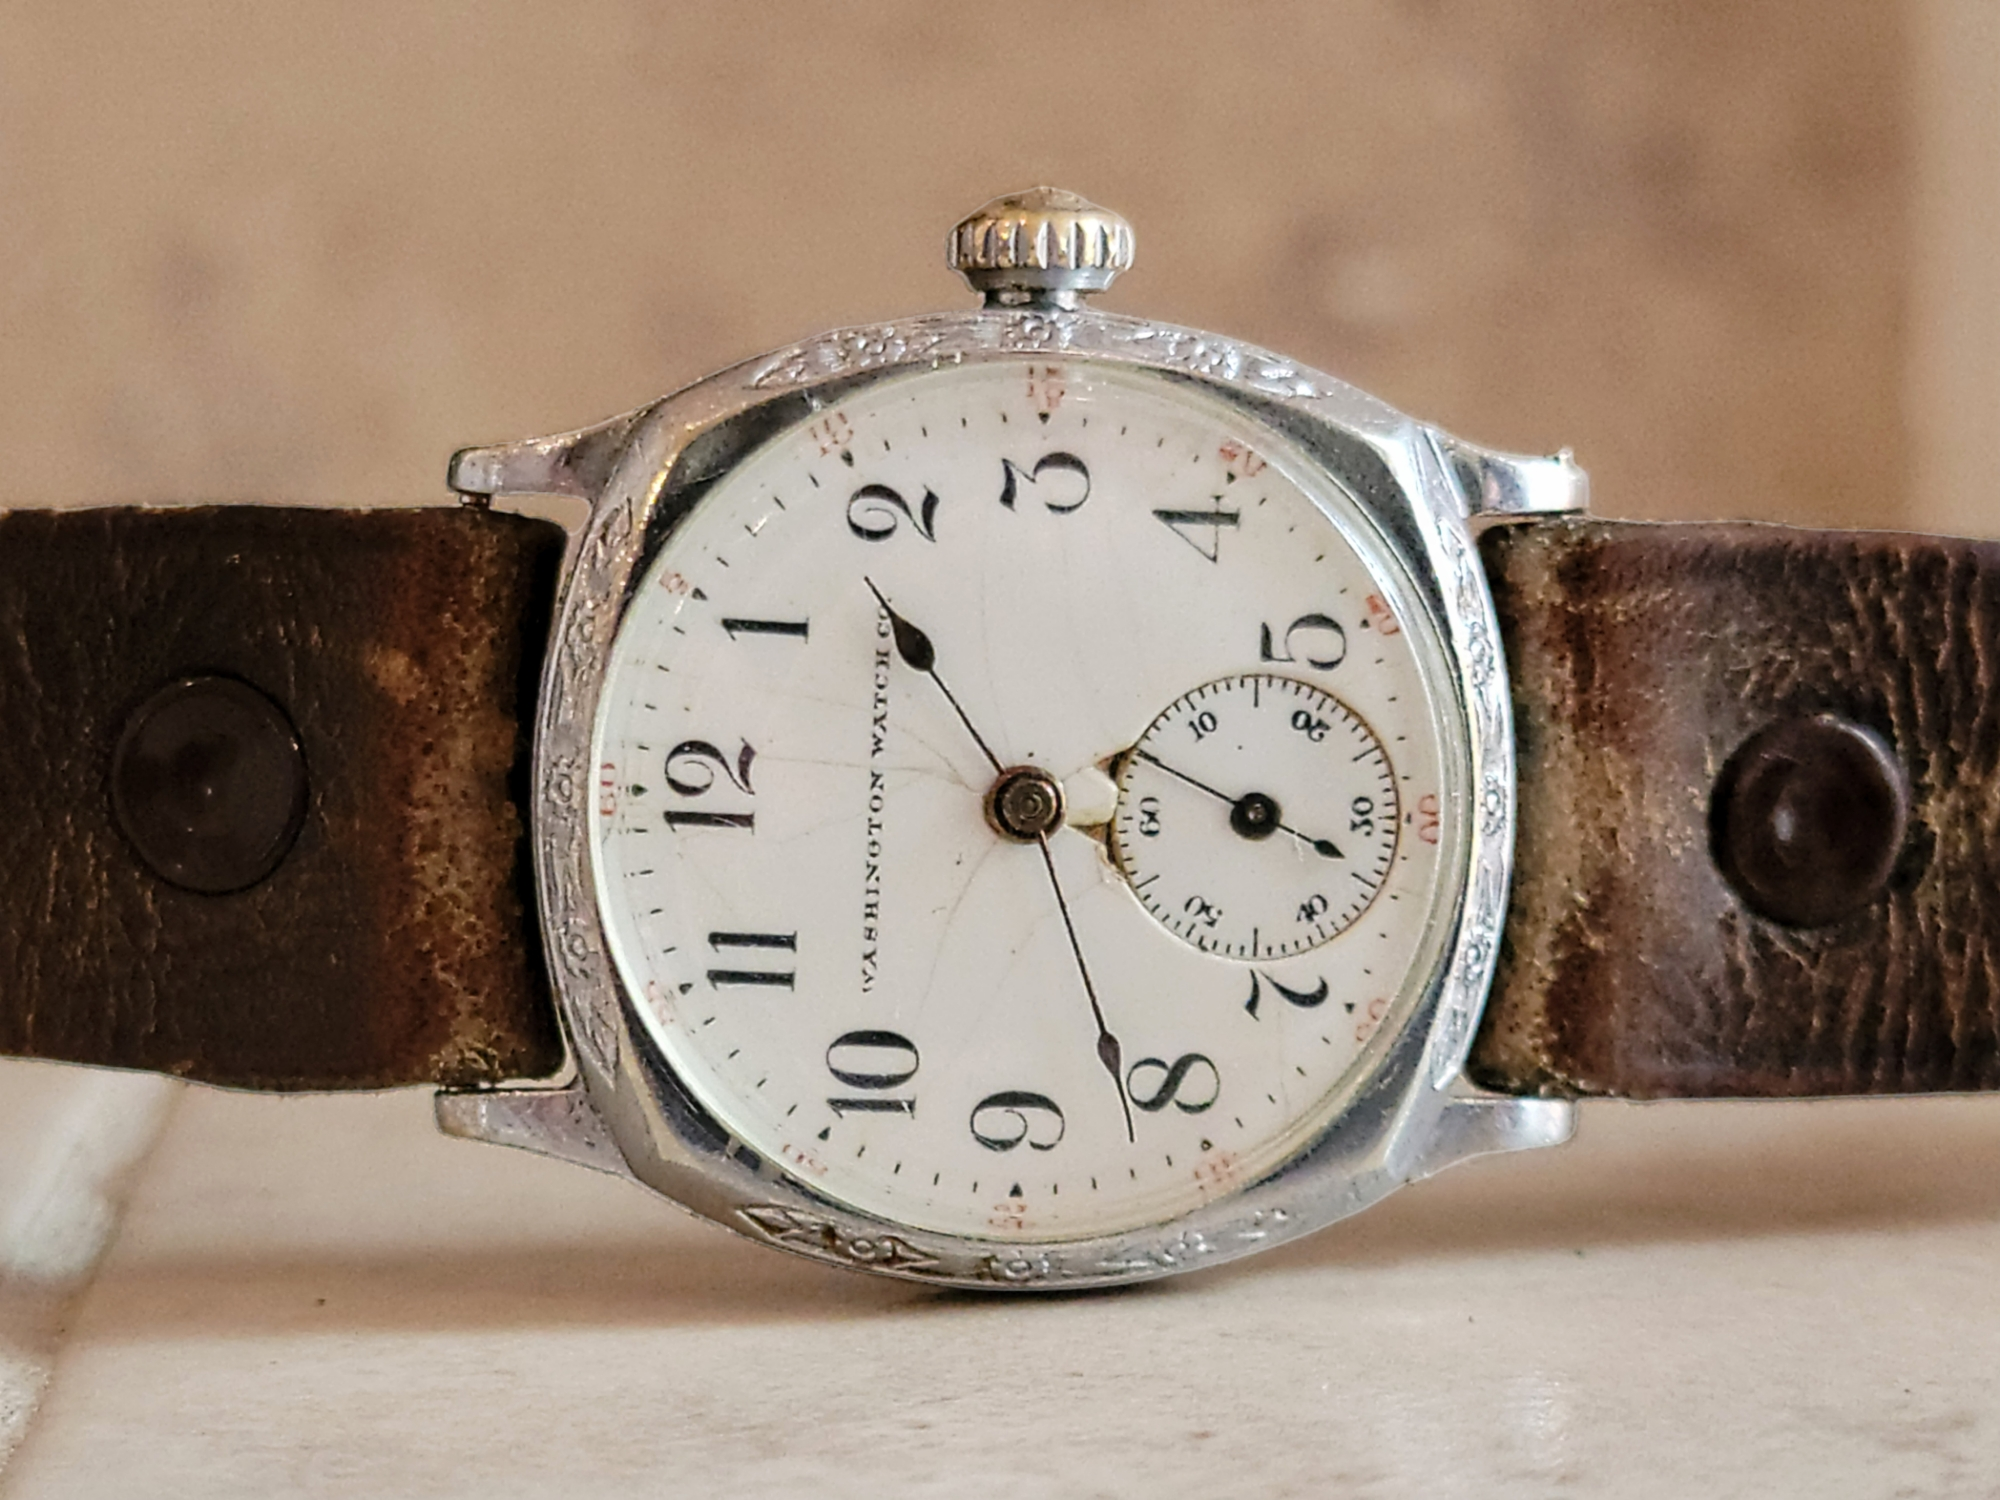 18s 21J Illinois Washington Watch Co pocket watch c1912